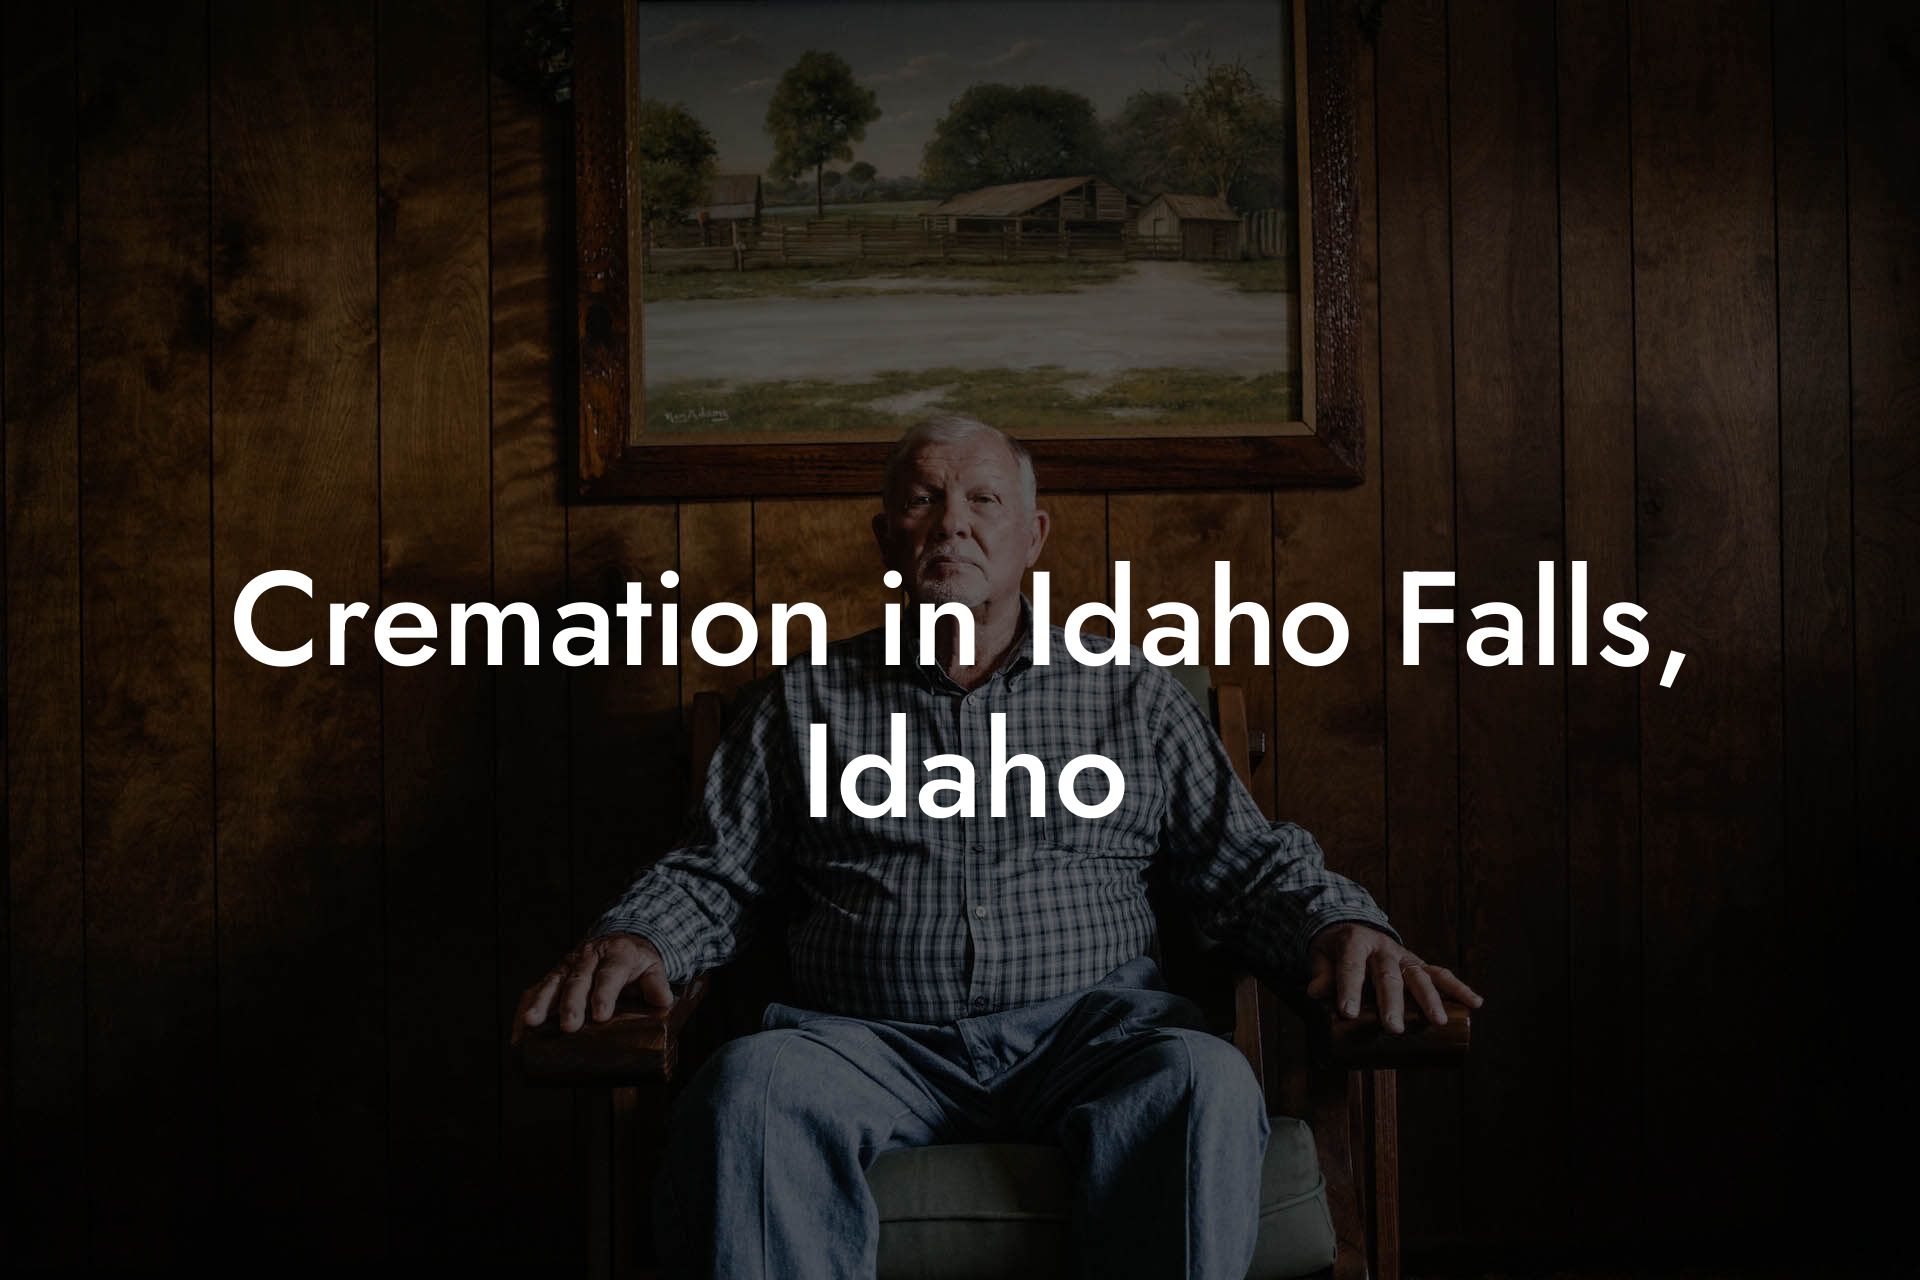 Cremation in Idaho Falls, Idaho